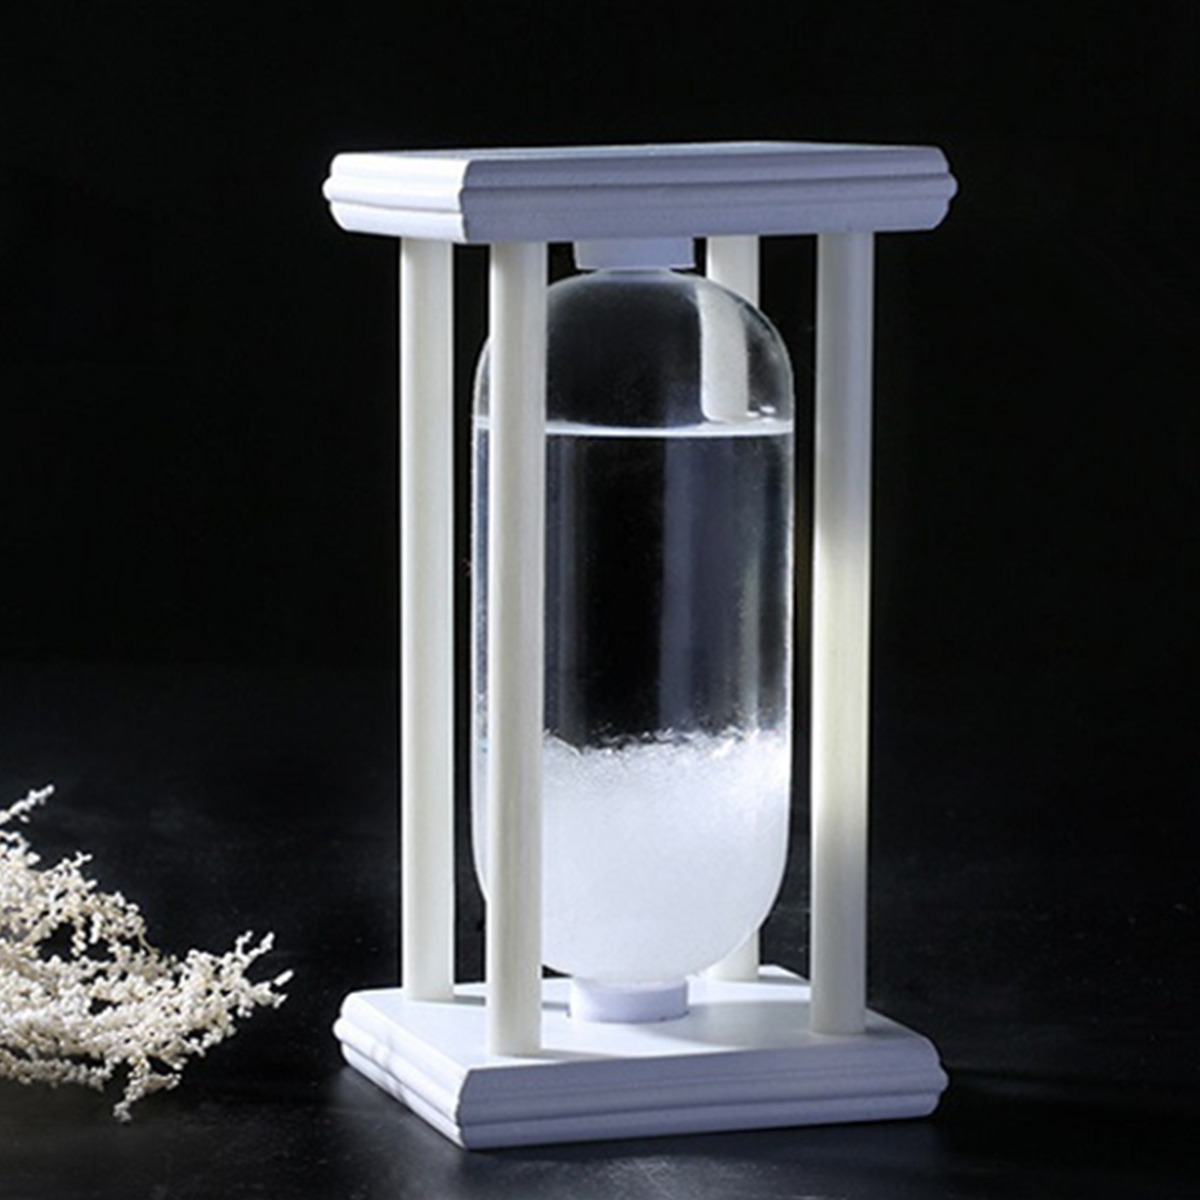 Previsions meteorologiques Creative Crystal Storm Glass Decoration creative Cadeau de Noel